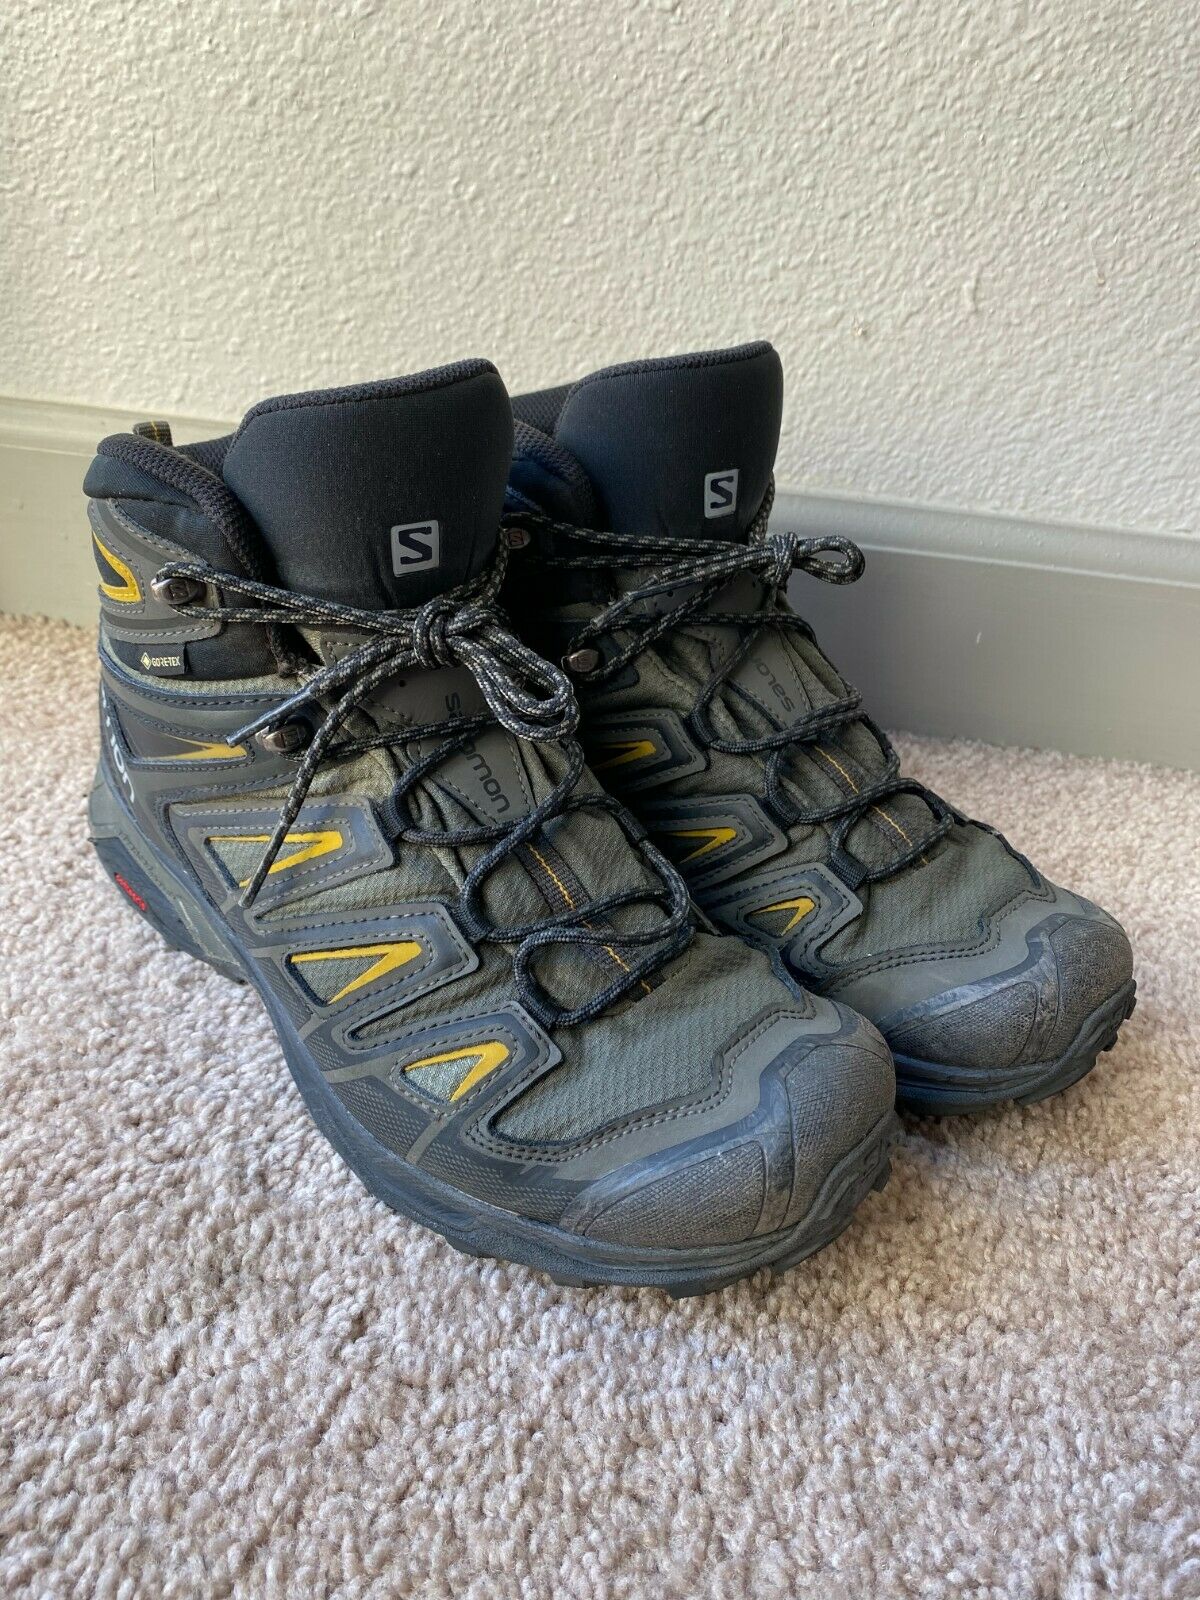 Salomon X Ultra 3 Mid Boots - Waterproof Gore Tex Hiking Boots - Men's Size 9.5